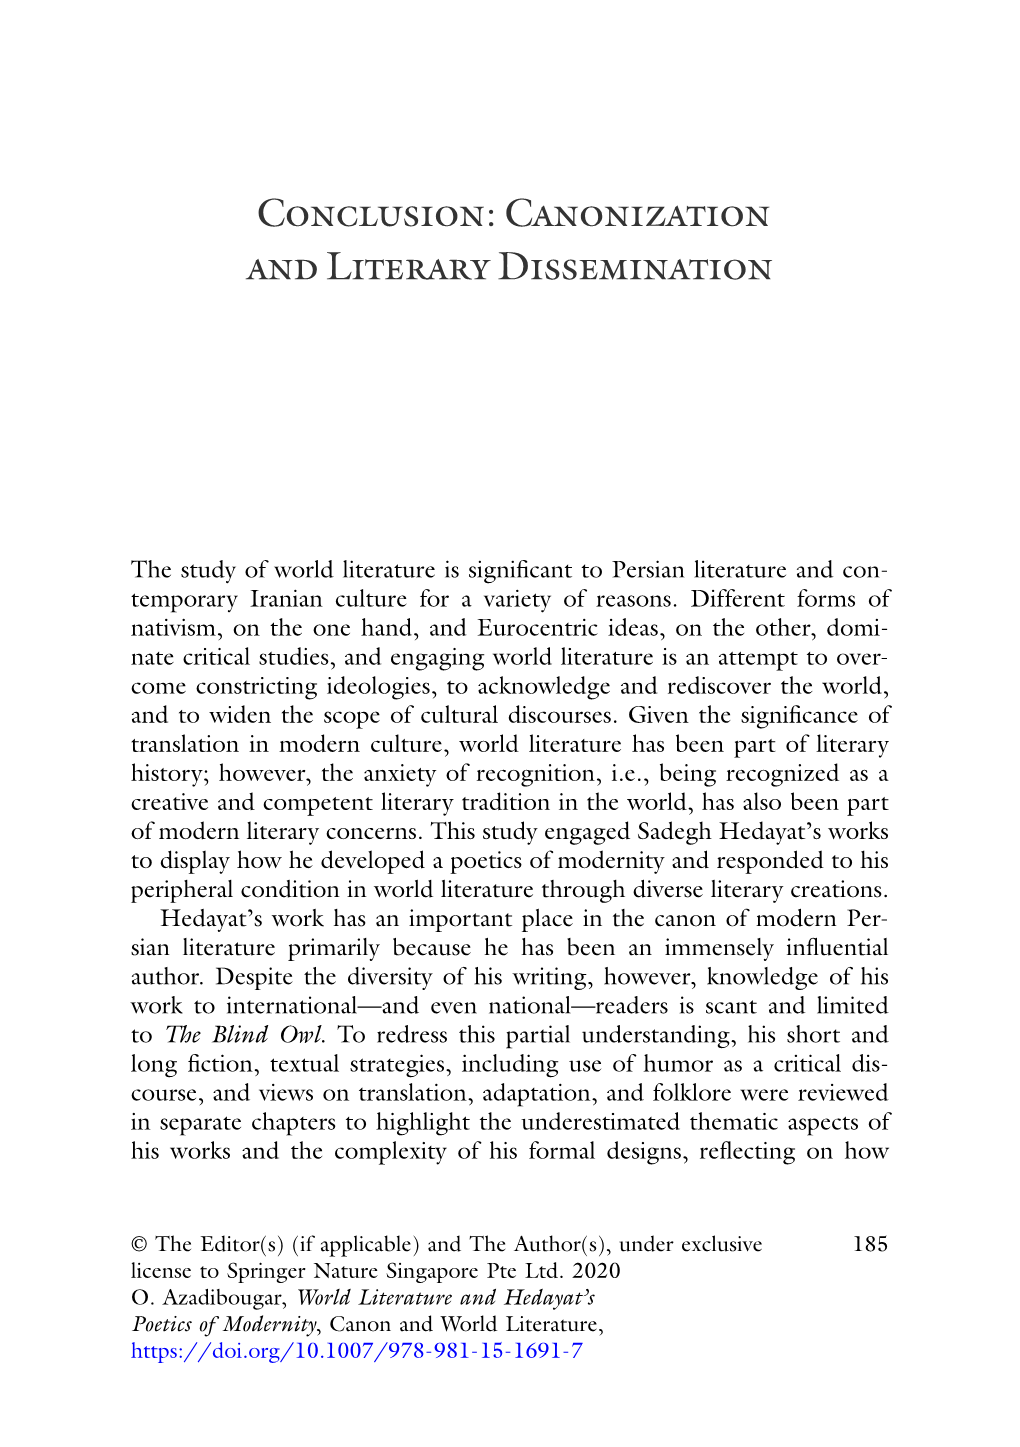 Conclusion: Canonization and Literary Dissemination